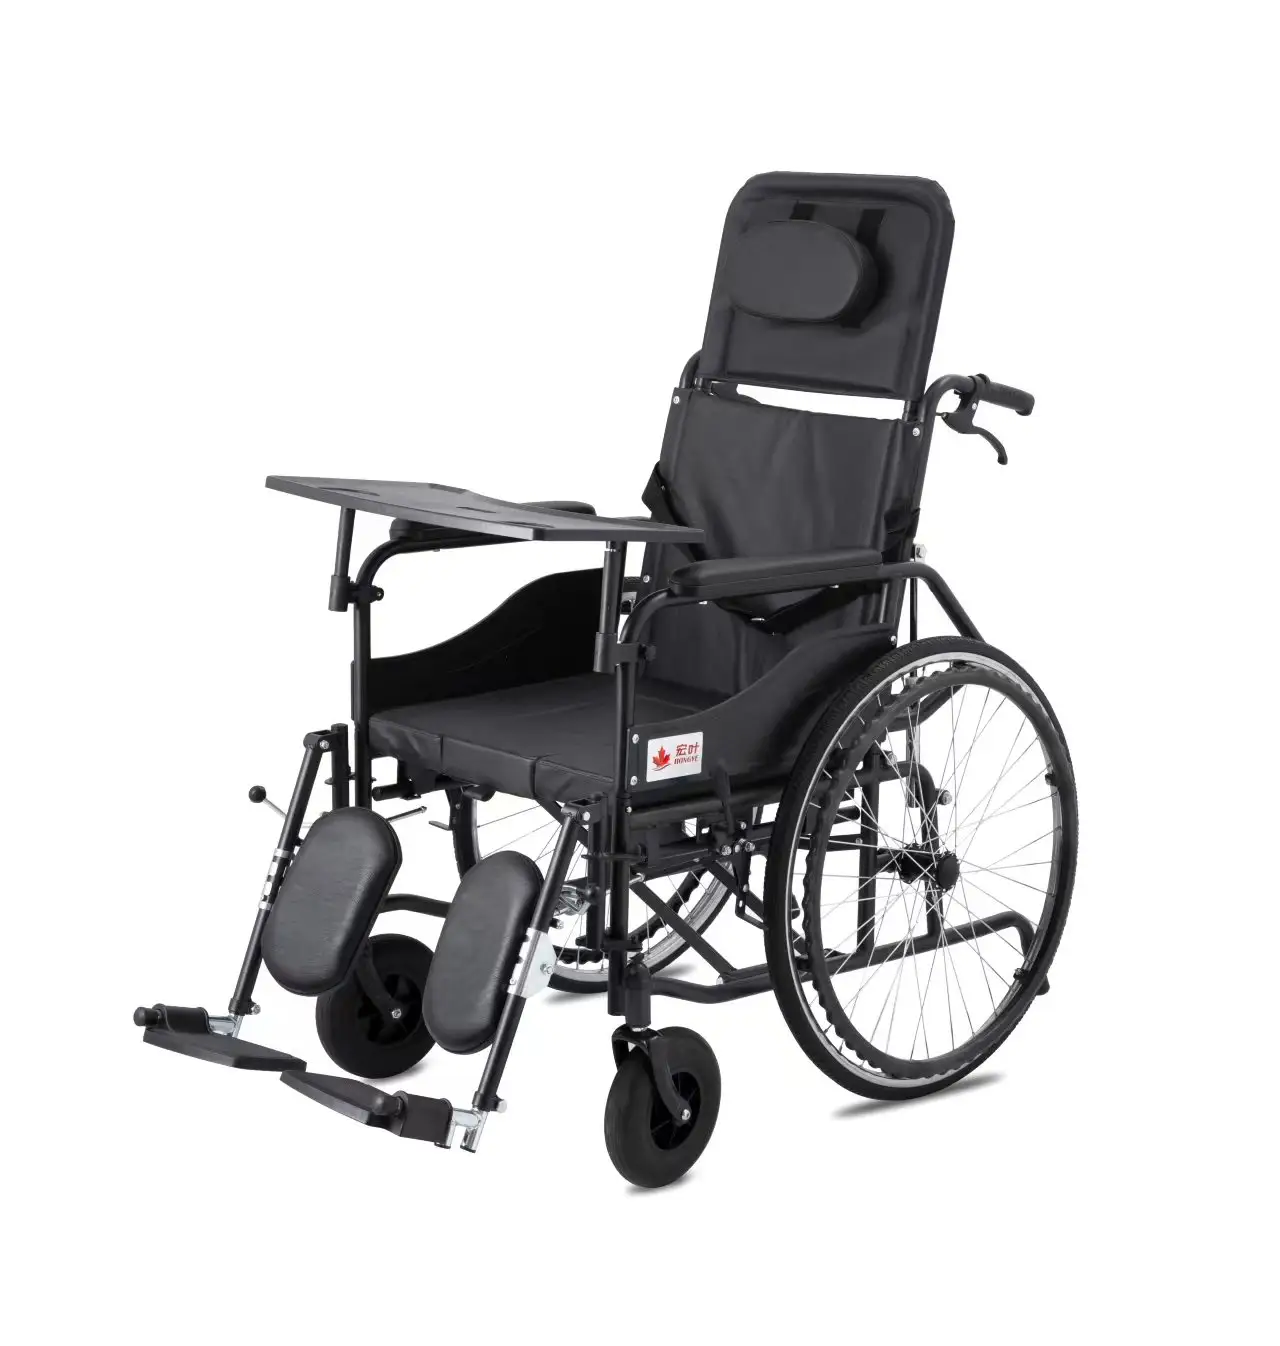 Harga rendah Kursi roda manual kursi roda baja karbon bantal kursi nyaman dengan sandaran dan sandaran kaki untuk orang cacat